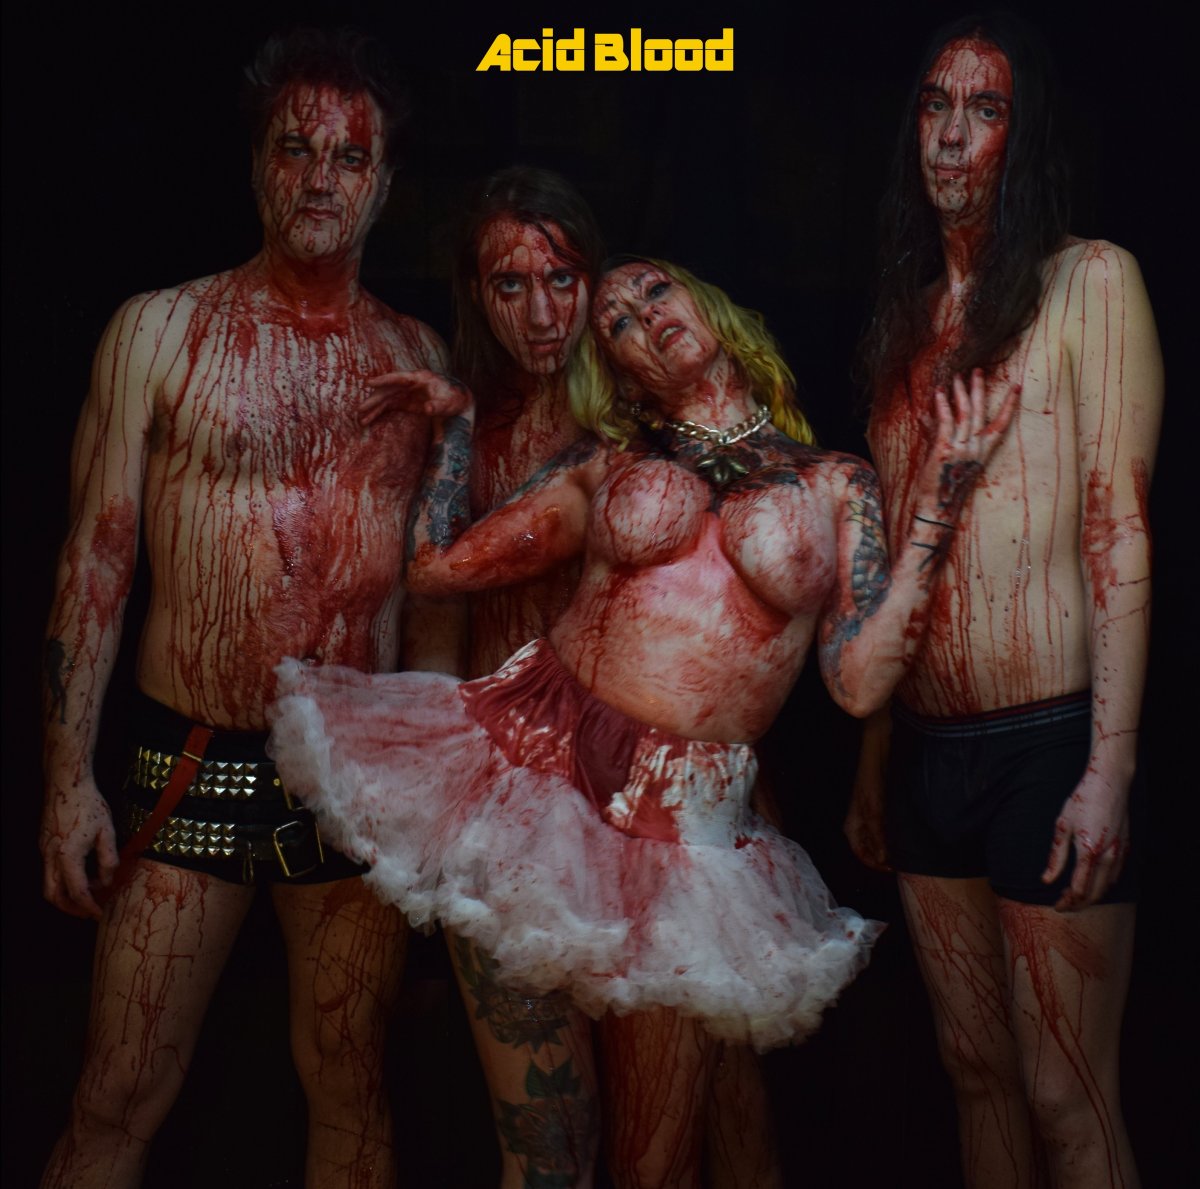 Acid Blood: Nuevo vídeo “Wartimes”